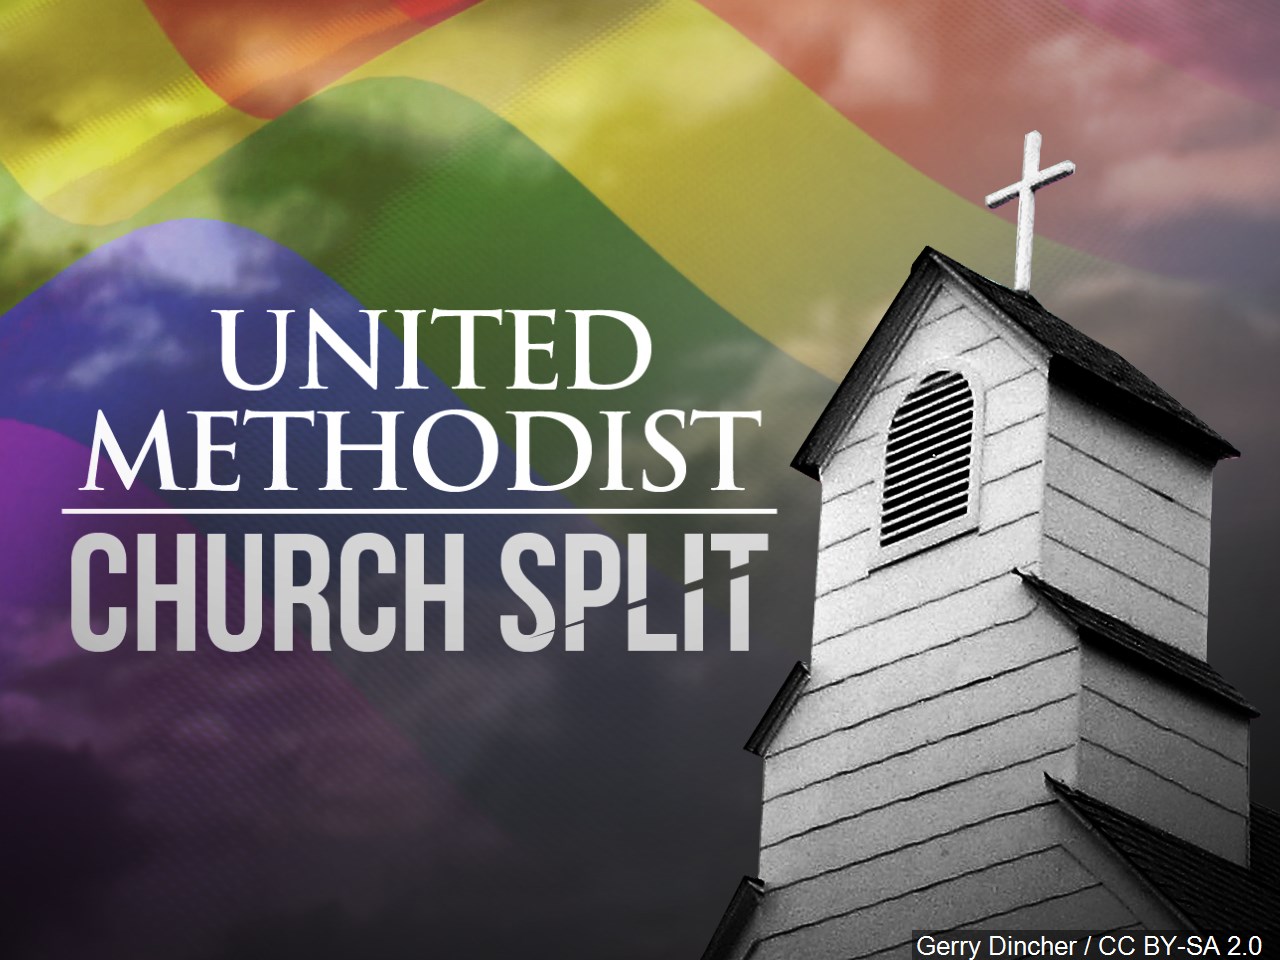 united methodist church split